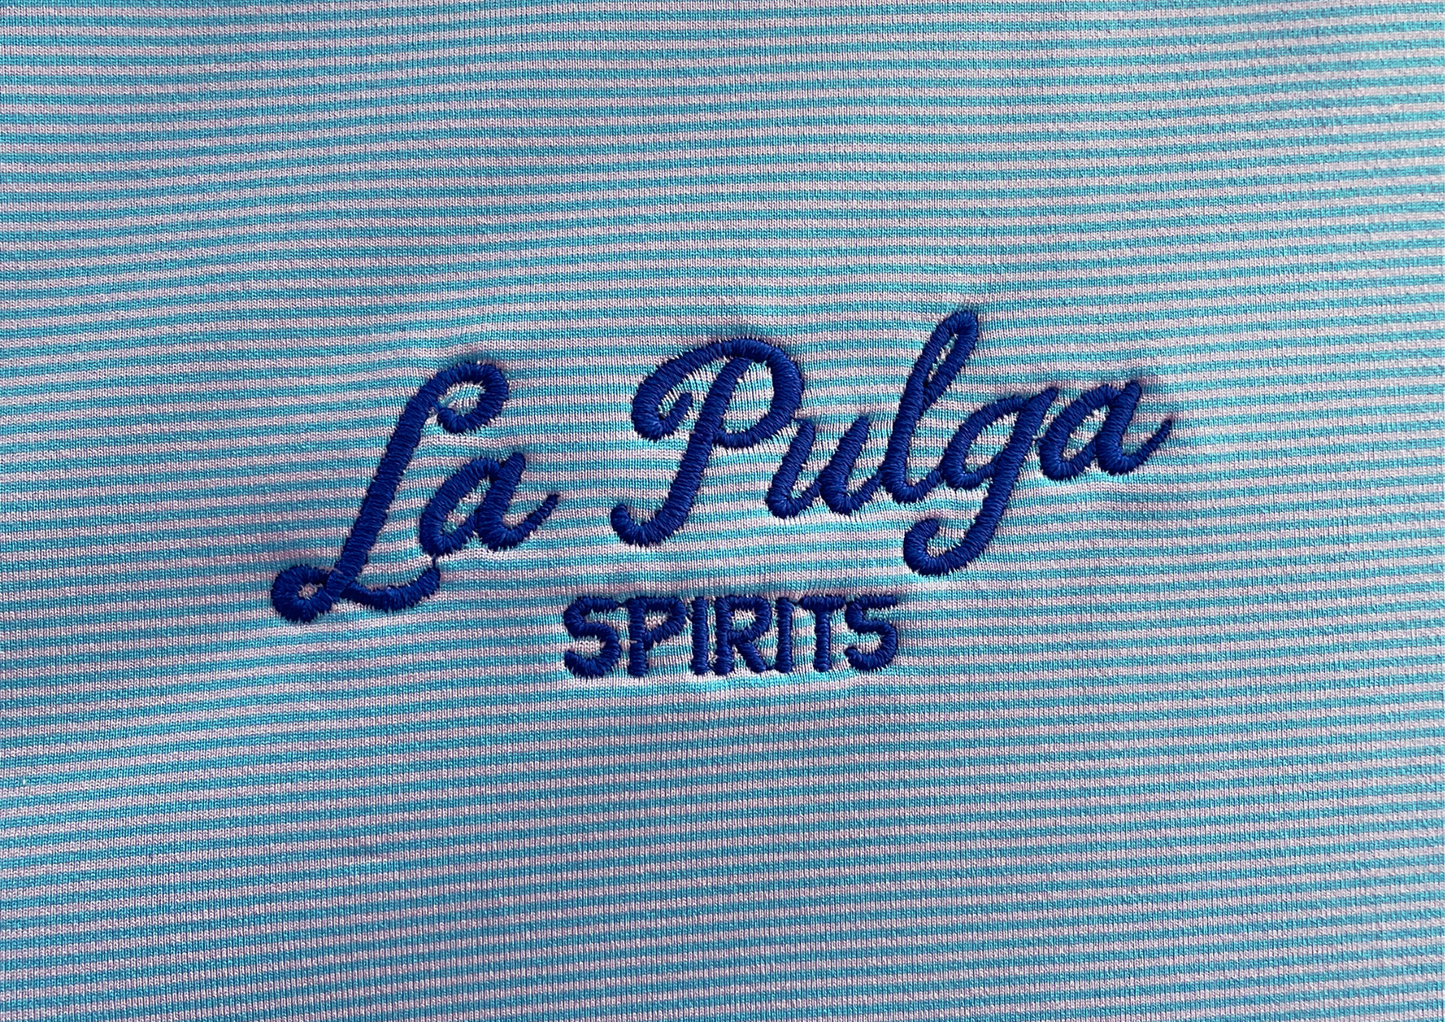 La Pulga Spirits Peter Millar Polo Shirt - Light Blue Stripes